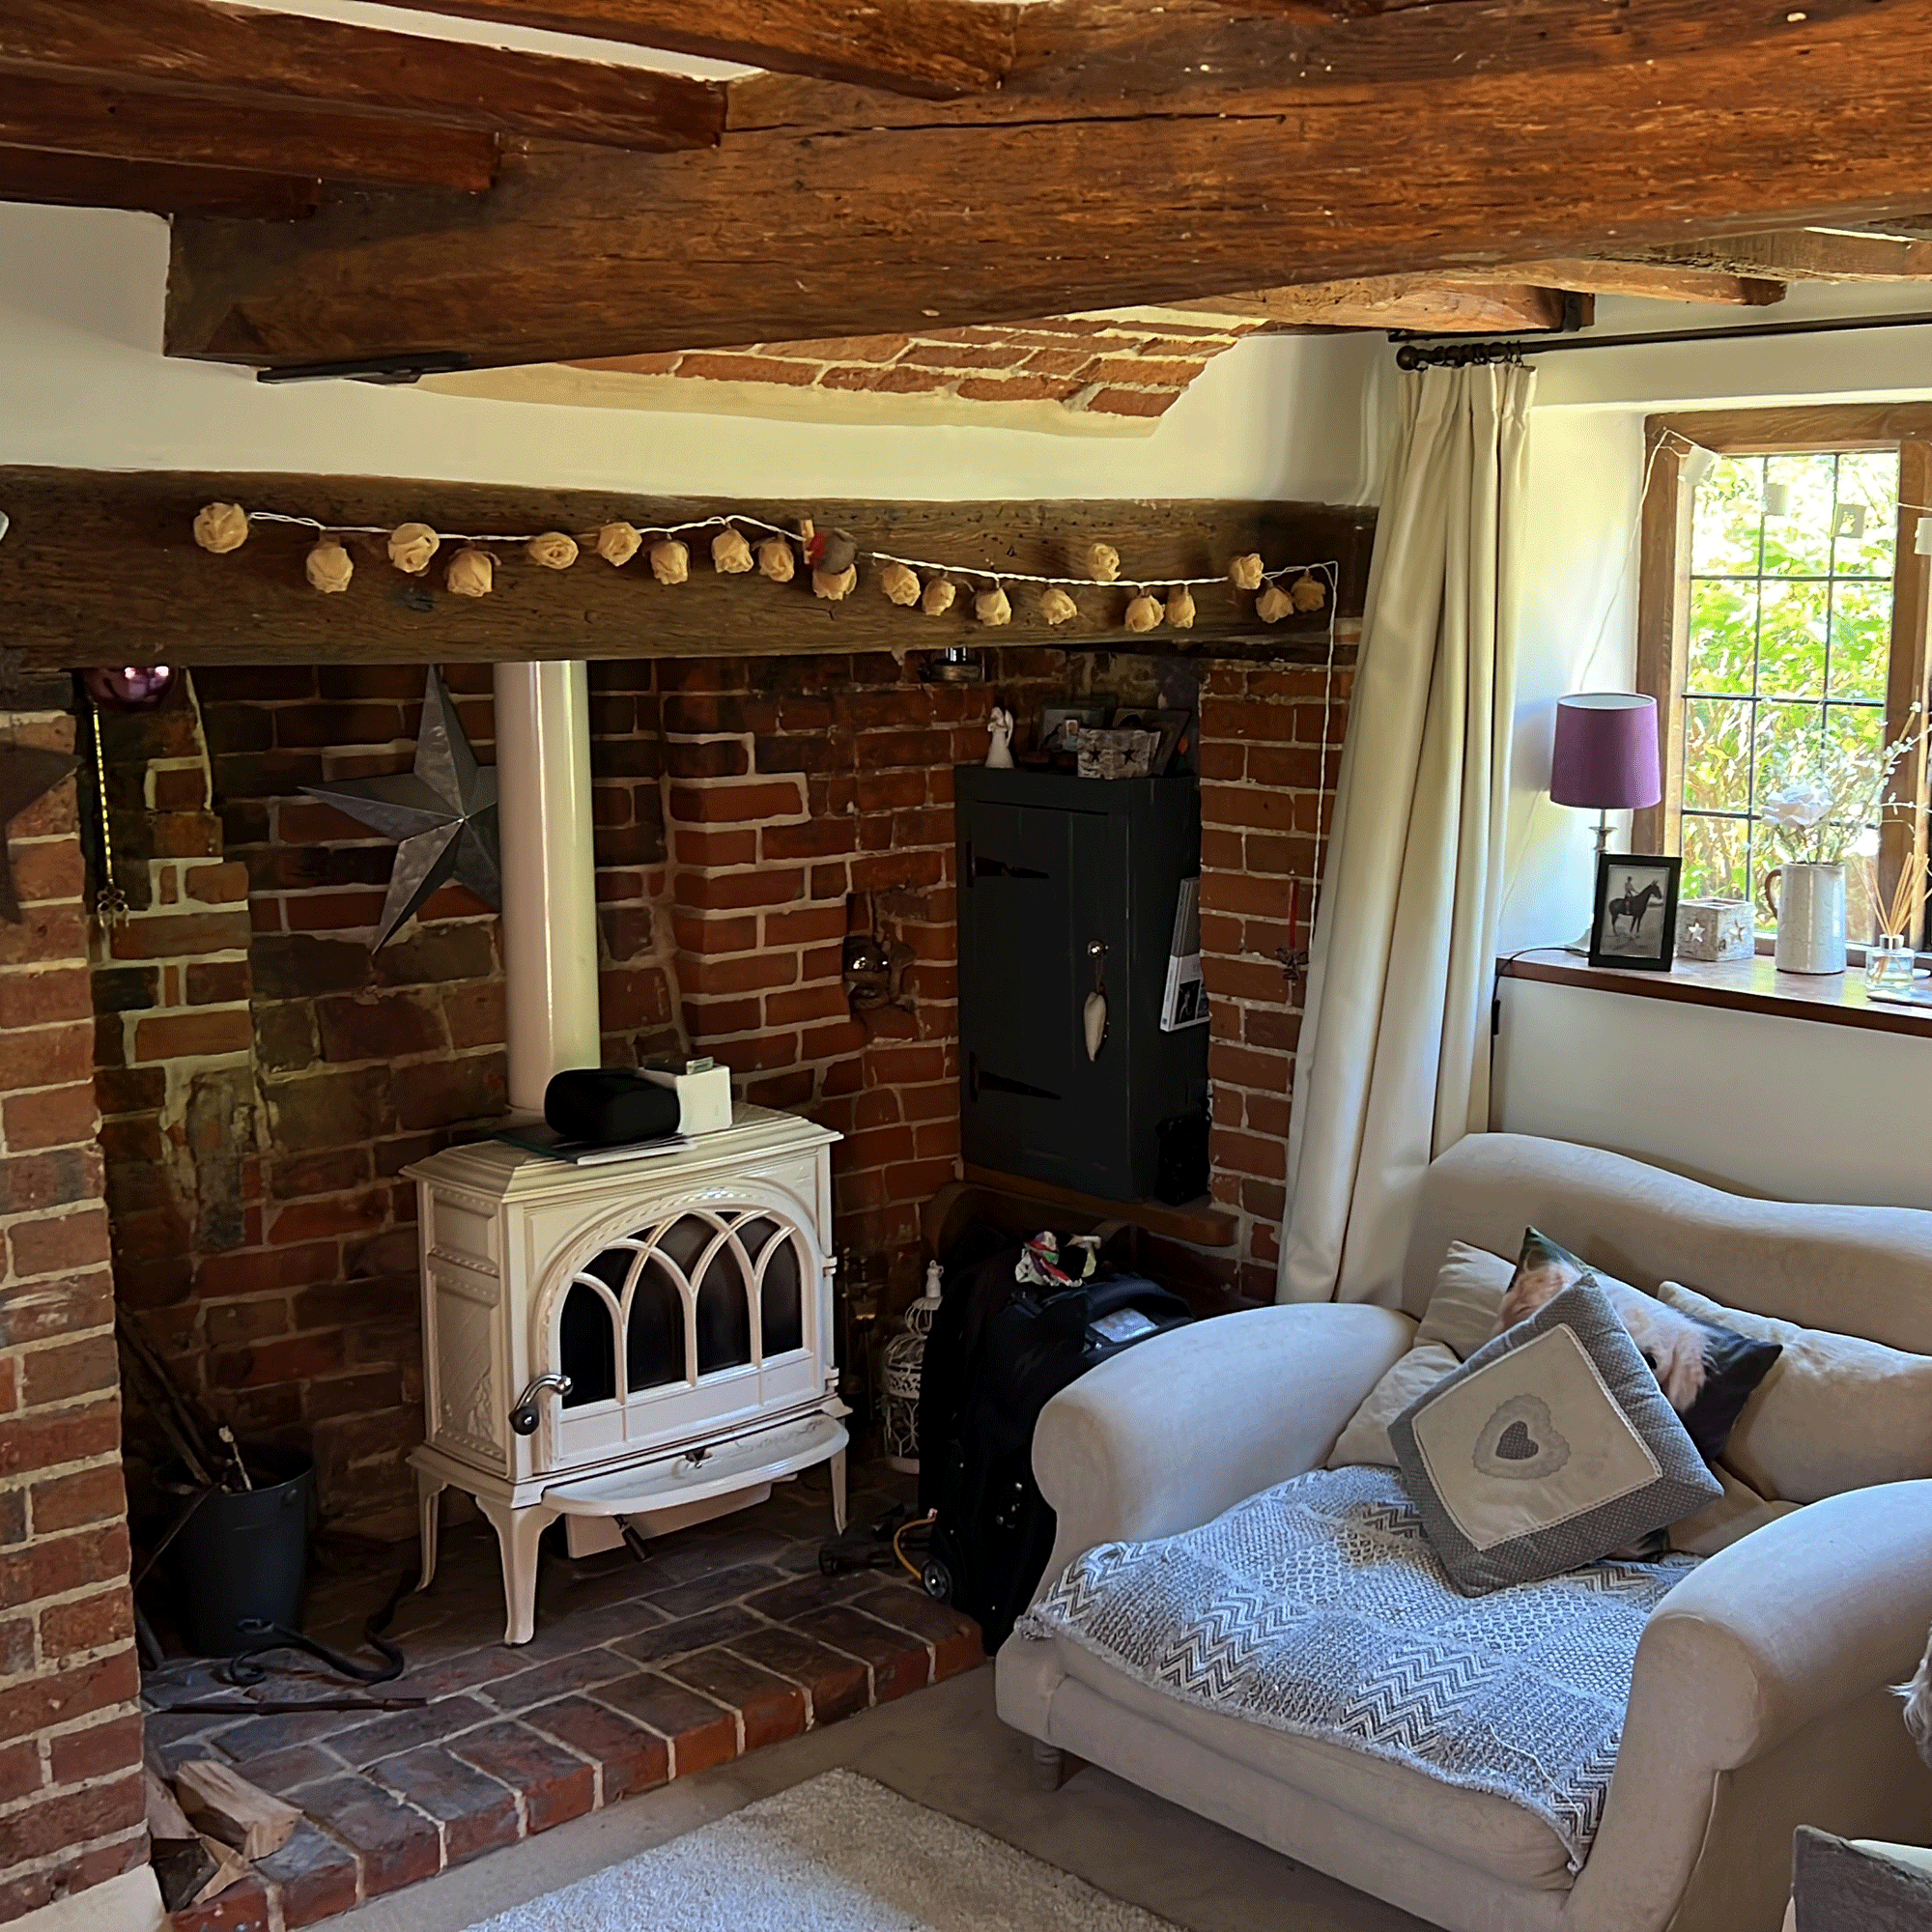 Holiday cottage inglenook fireplace